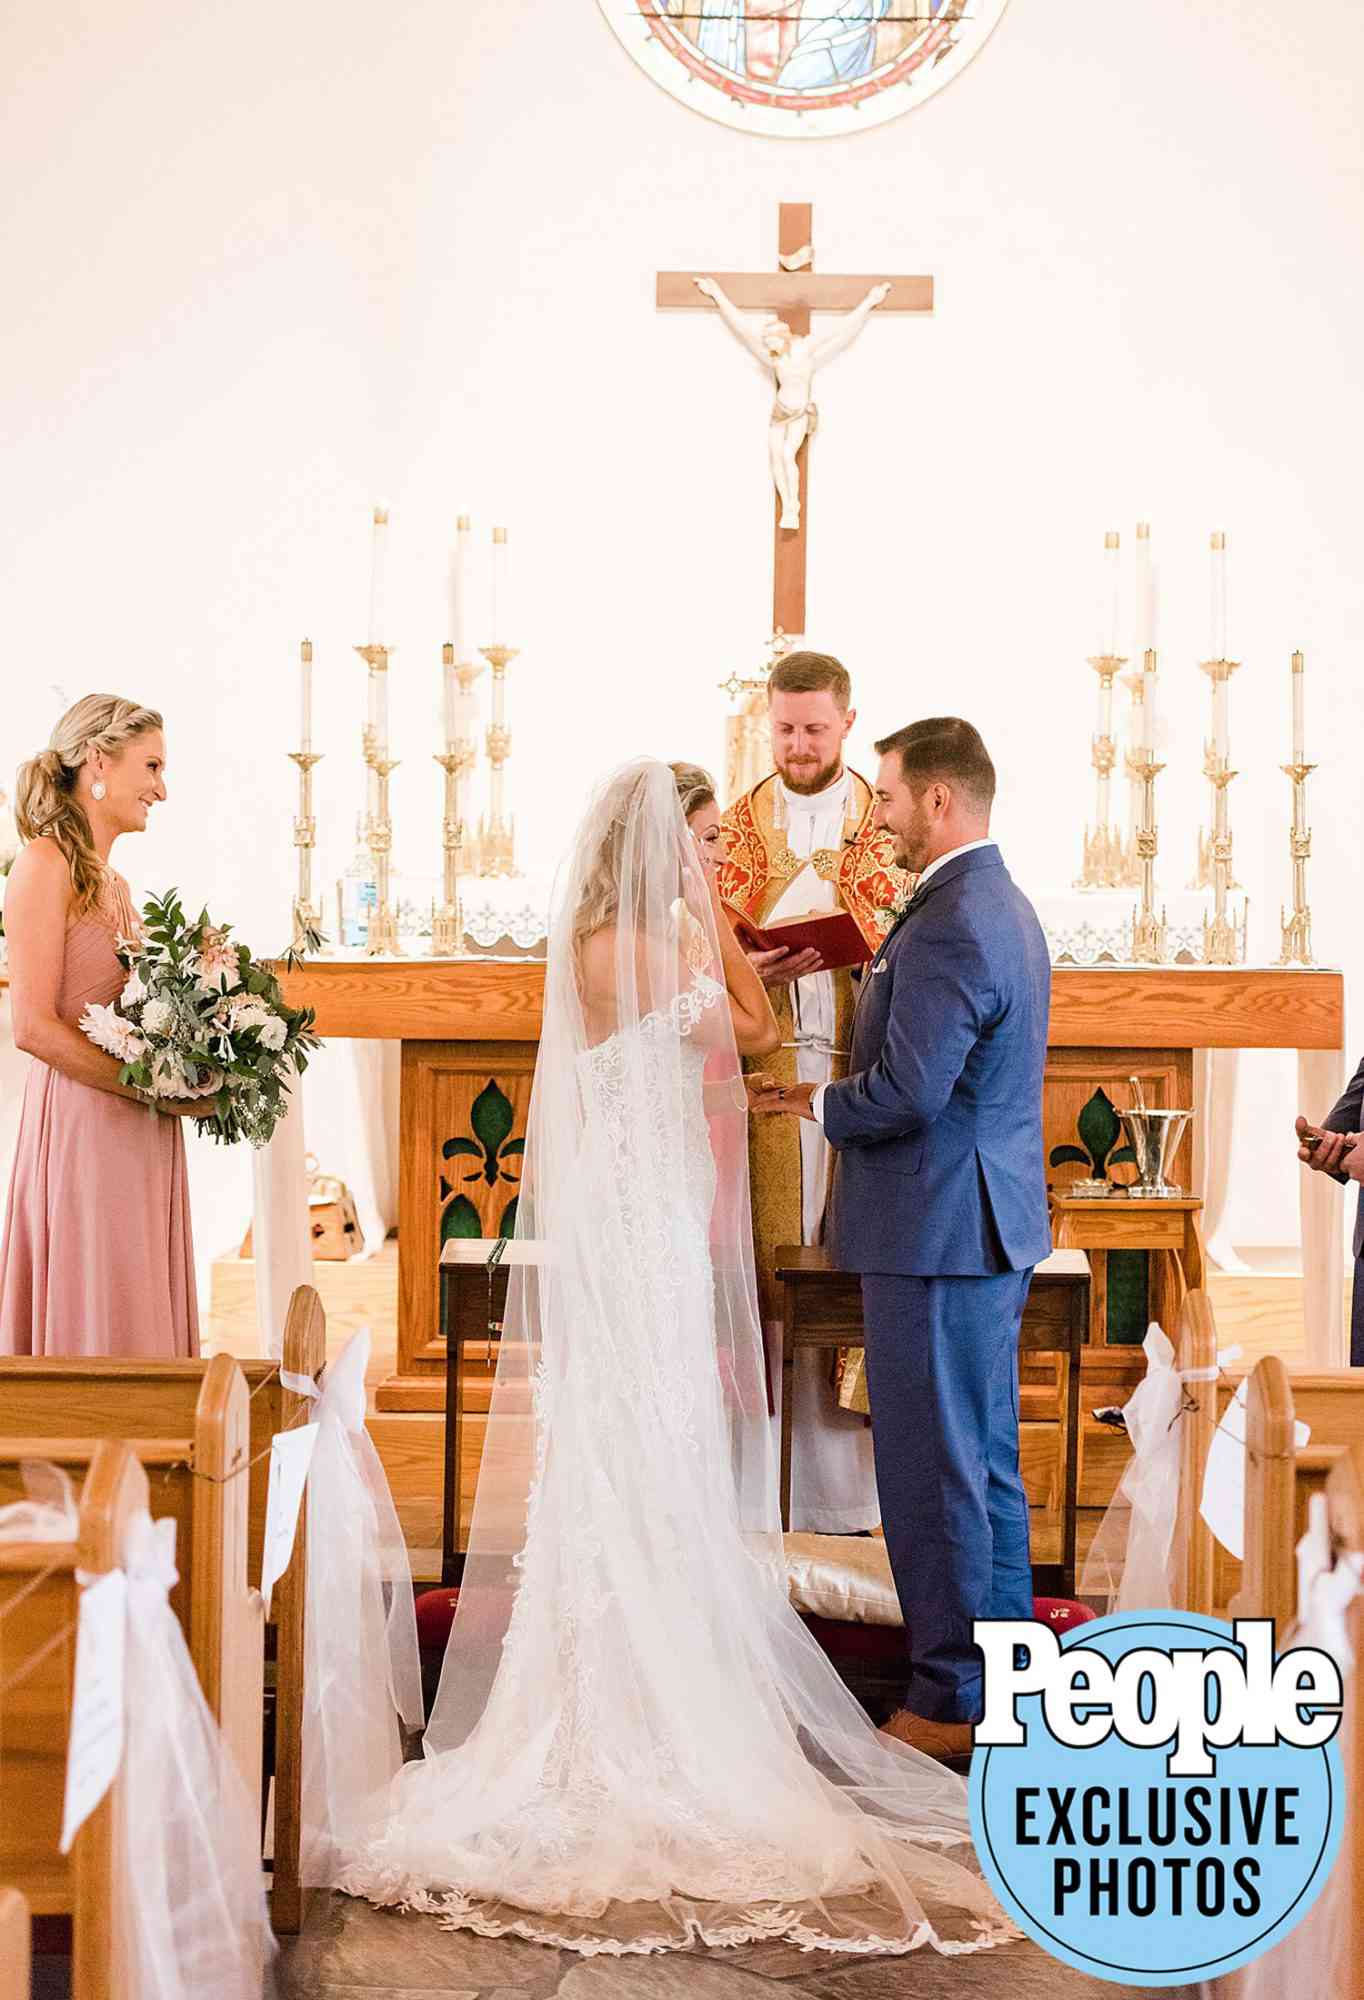 Karen Waldrup and Cody Henson get married